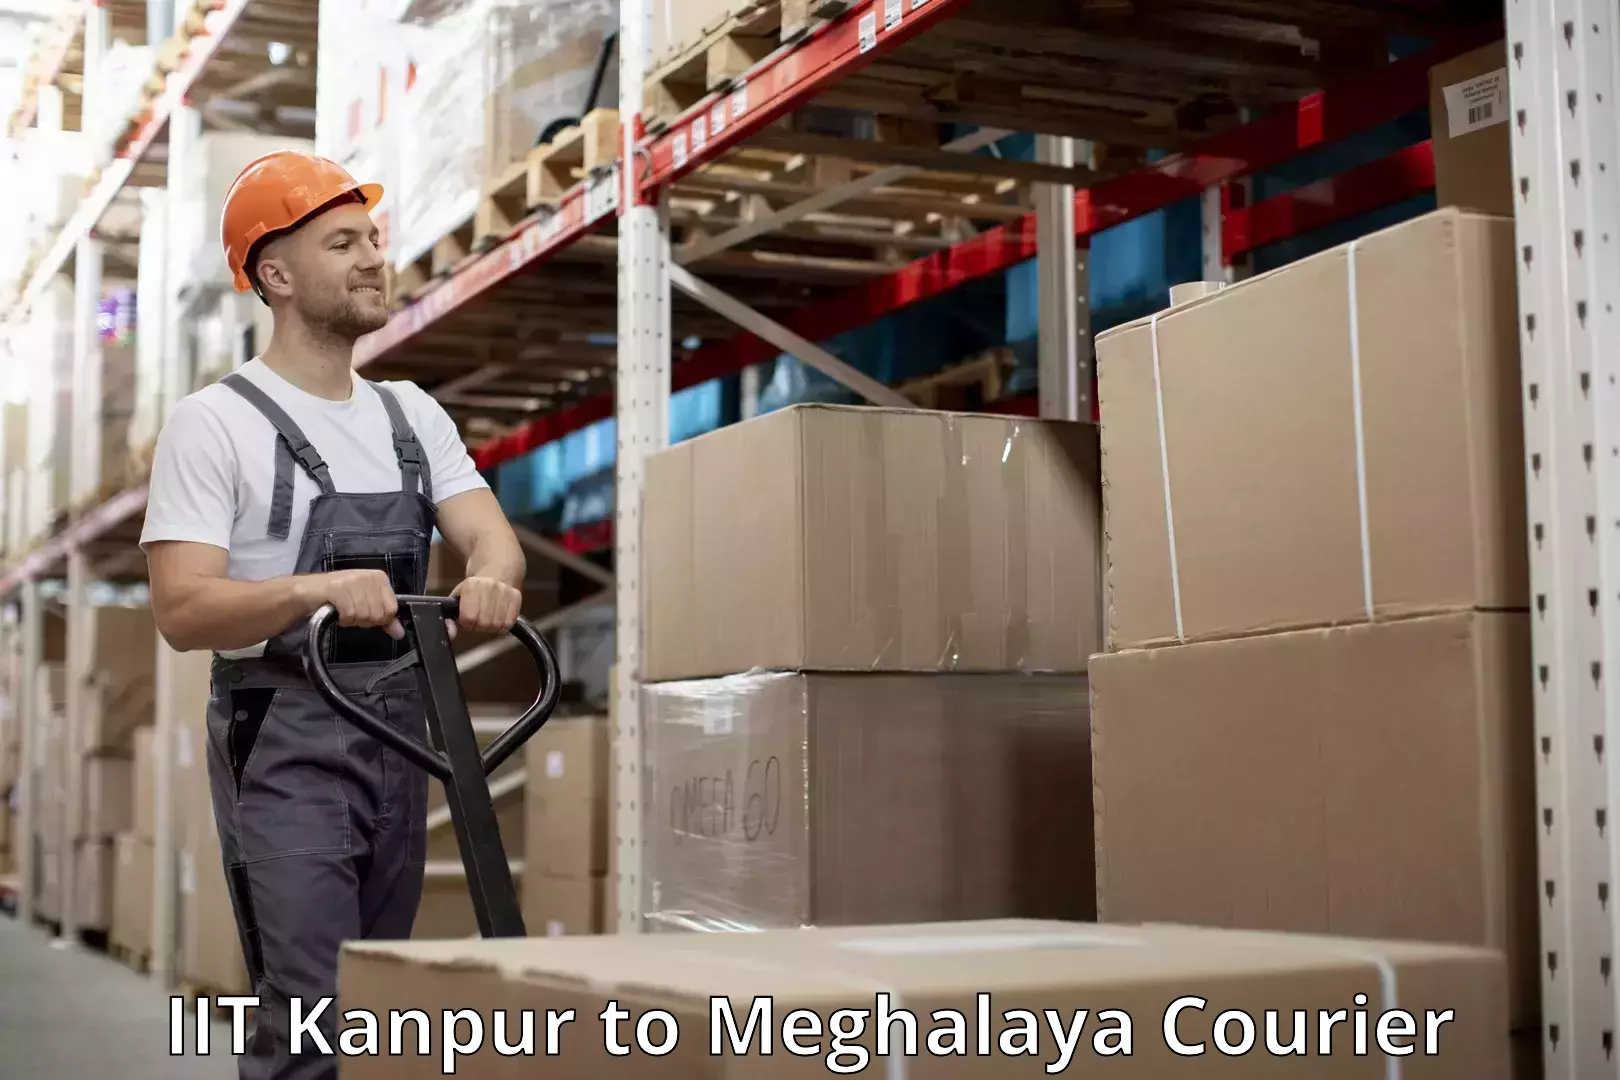 Luggage shipment tracking IIT Kanpur to Meghalaya